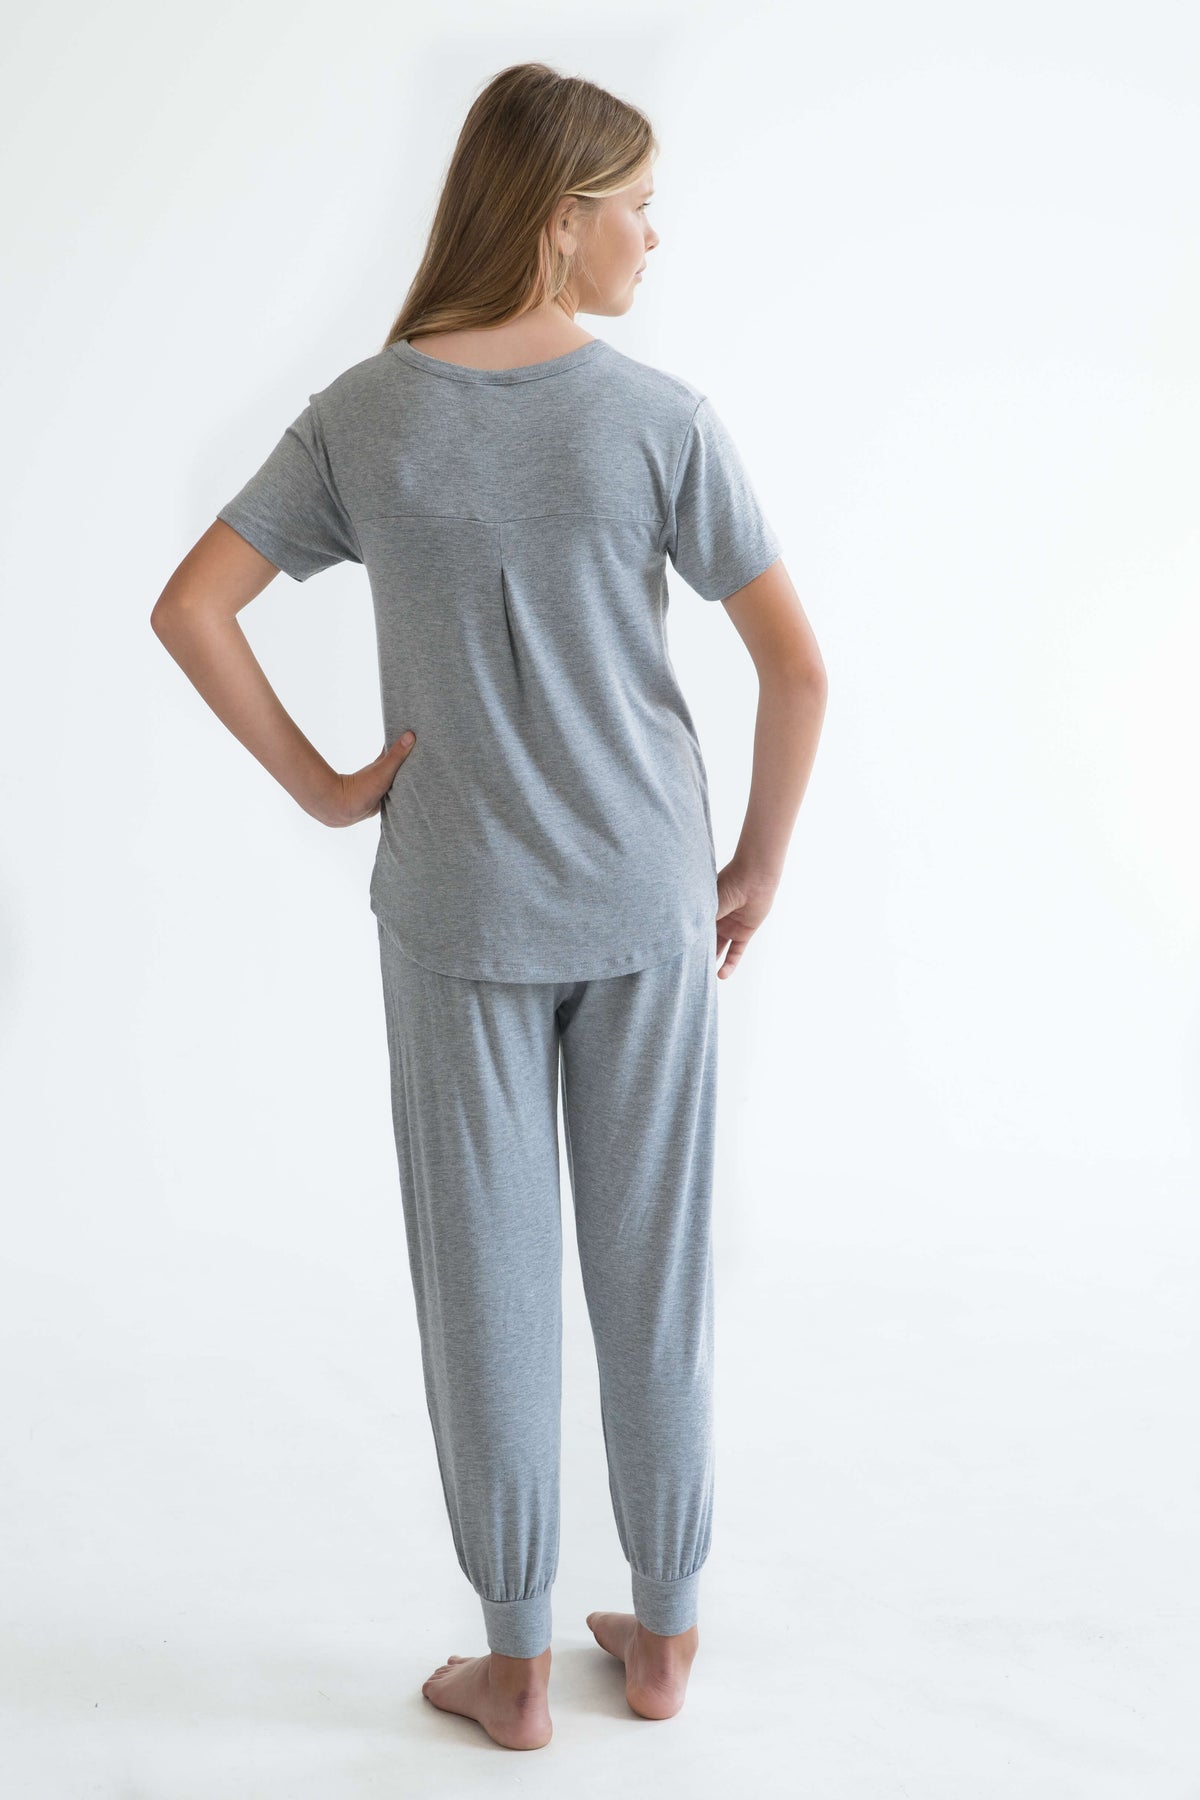 grey teen girls bamboo pyjamas long pants elastic waist, pockets and drawstring by Love Haidee Australia back